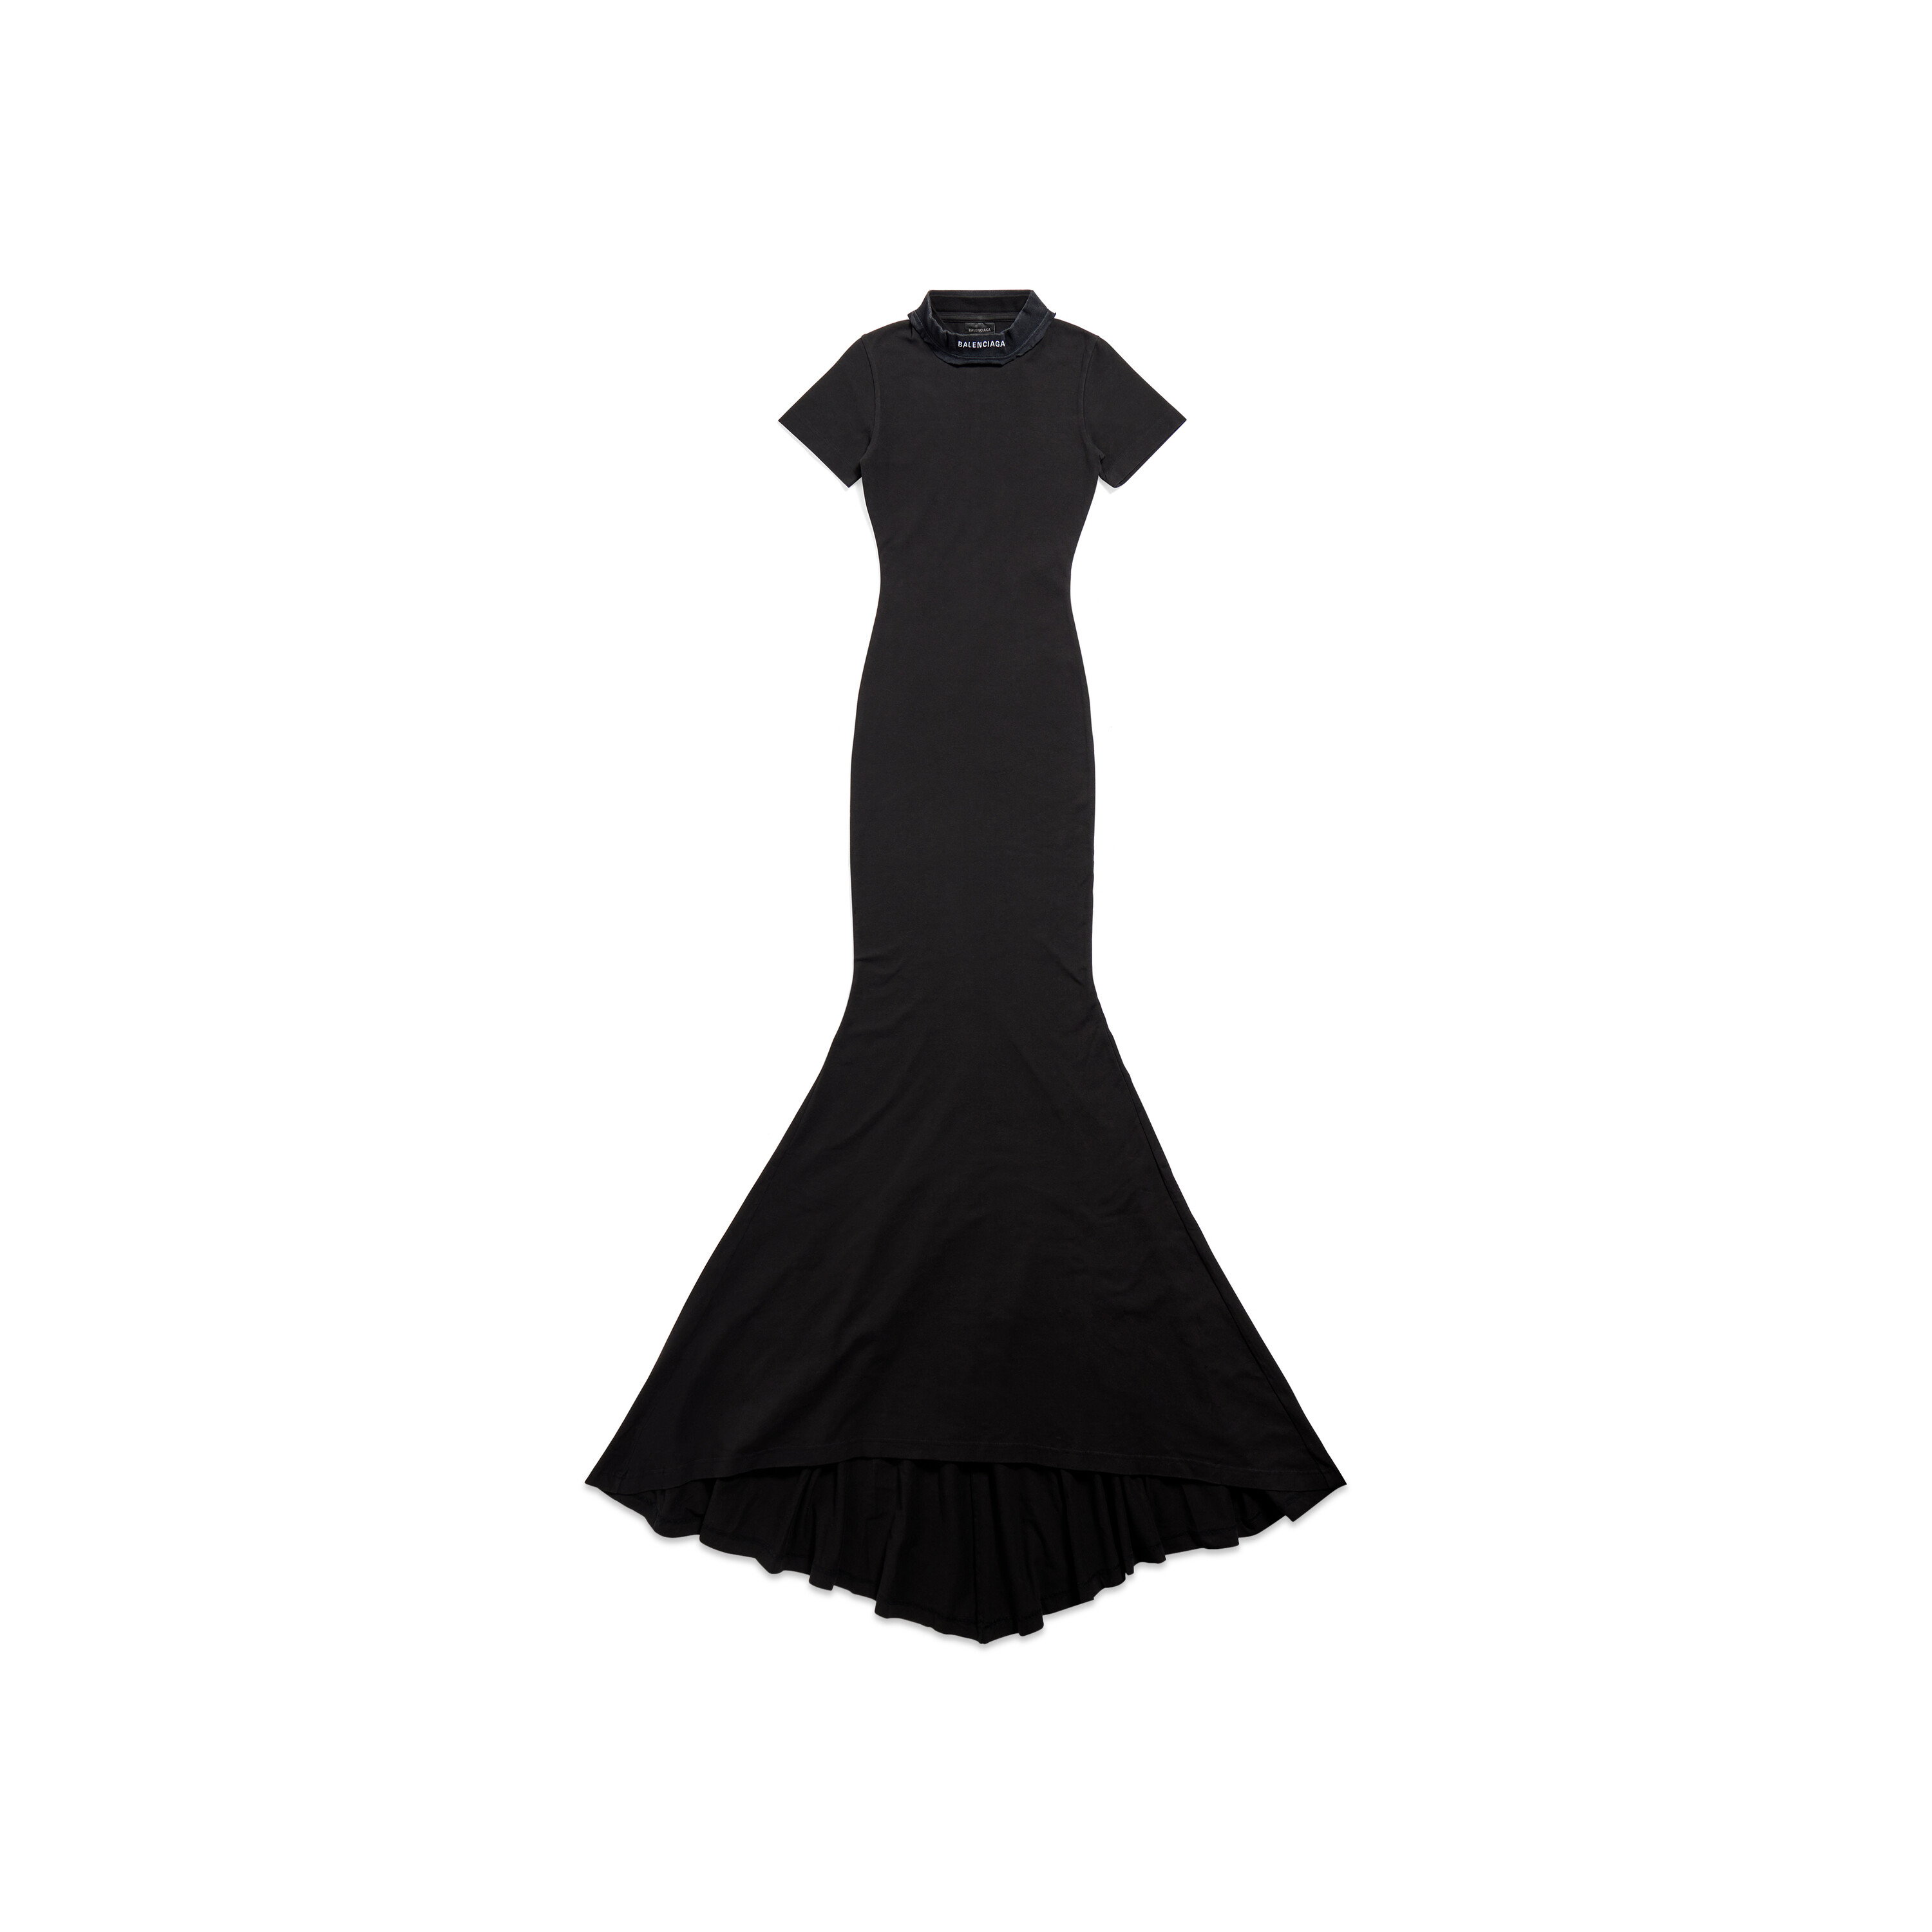 Boutique BALENCIAGA Black and white graphic print silk draped dress Retail  price 1400 Size XS